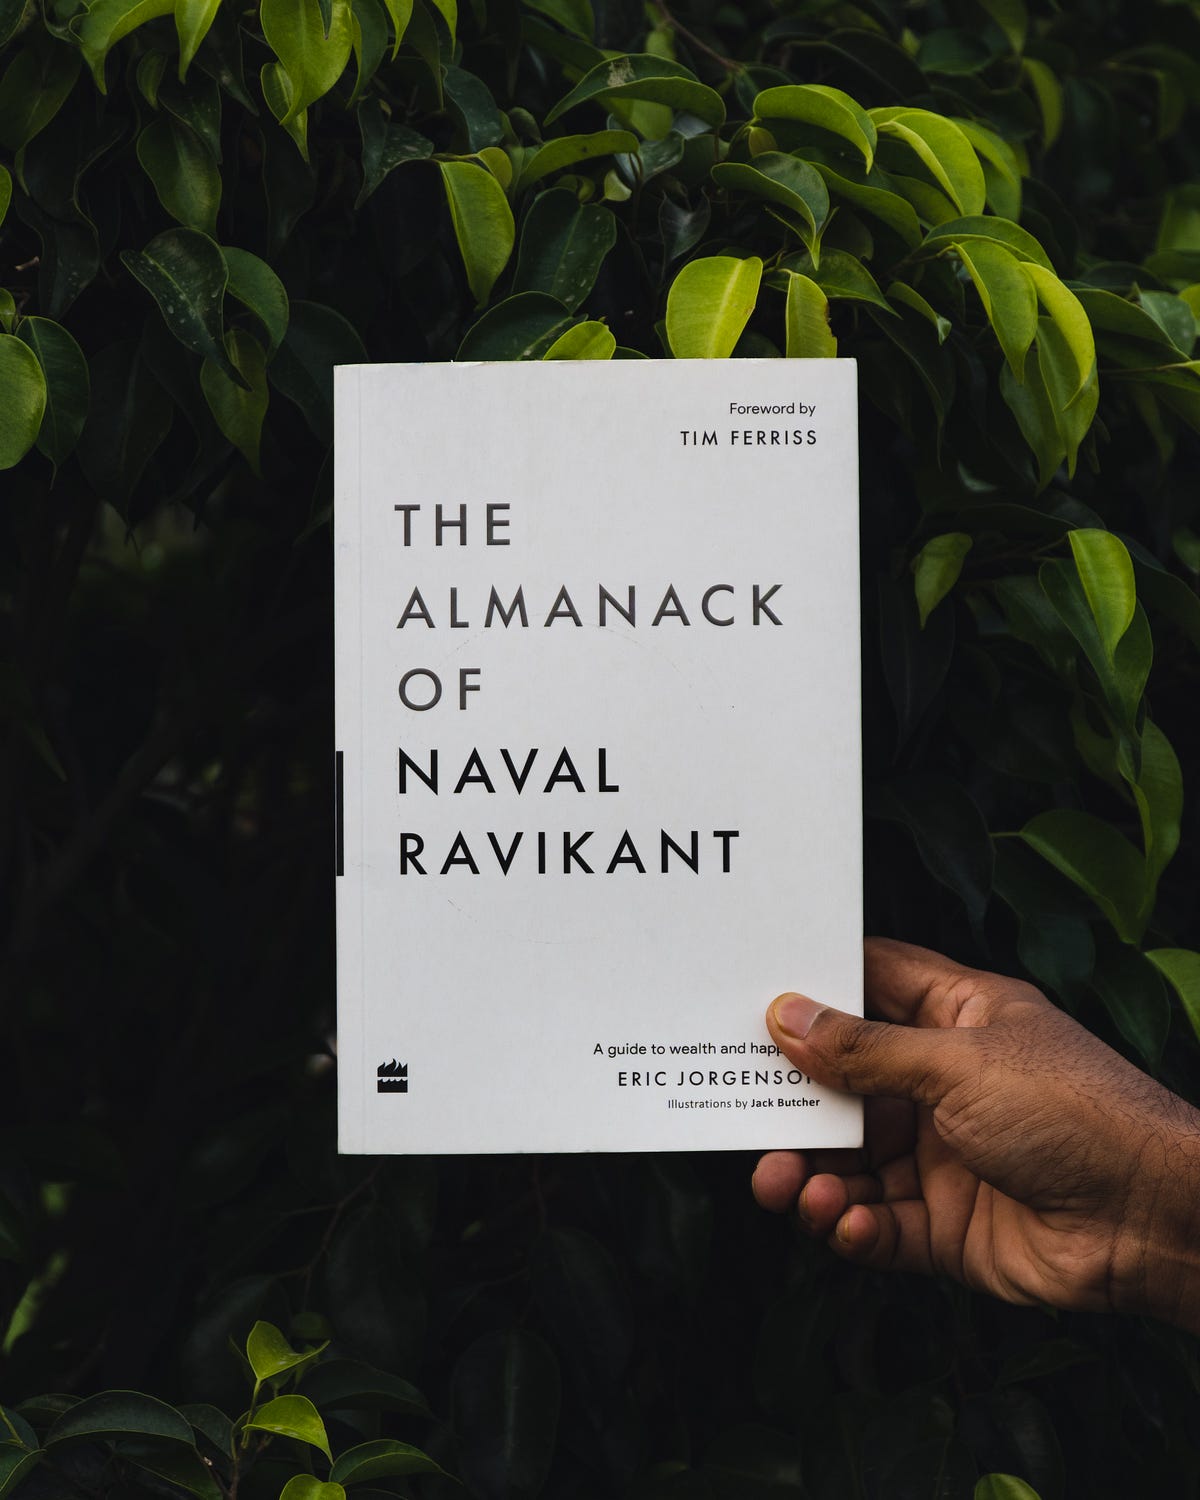 Illustrations for the Almanack of Naval Ravikant